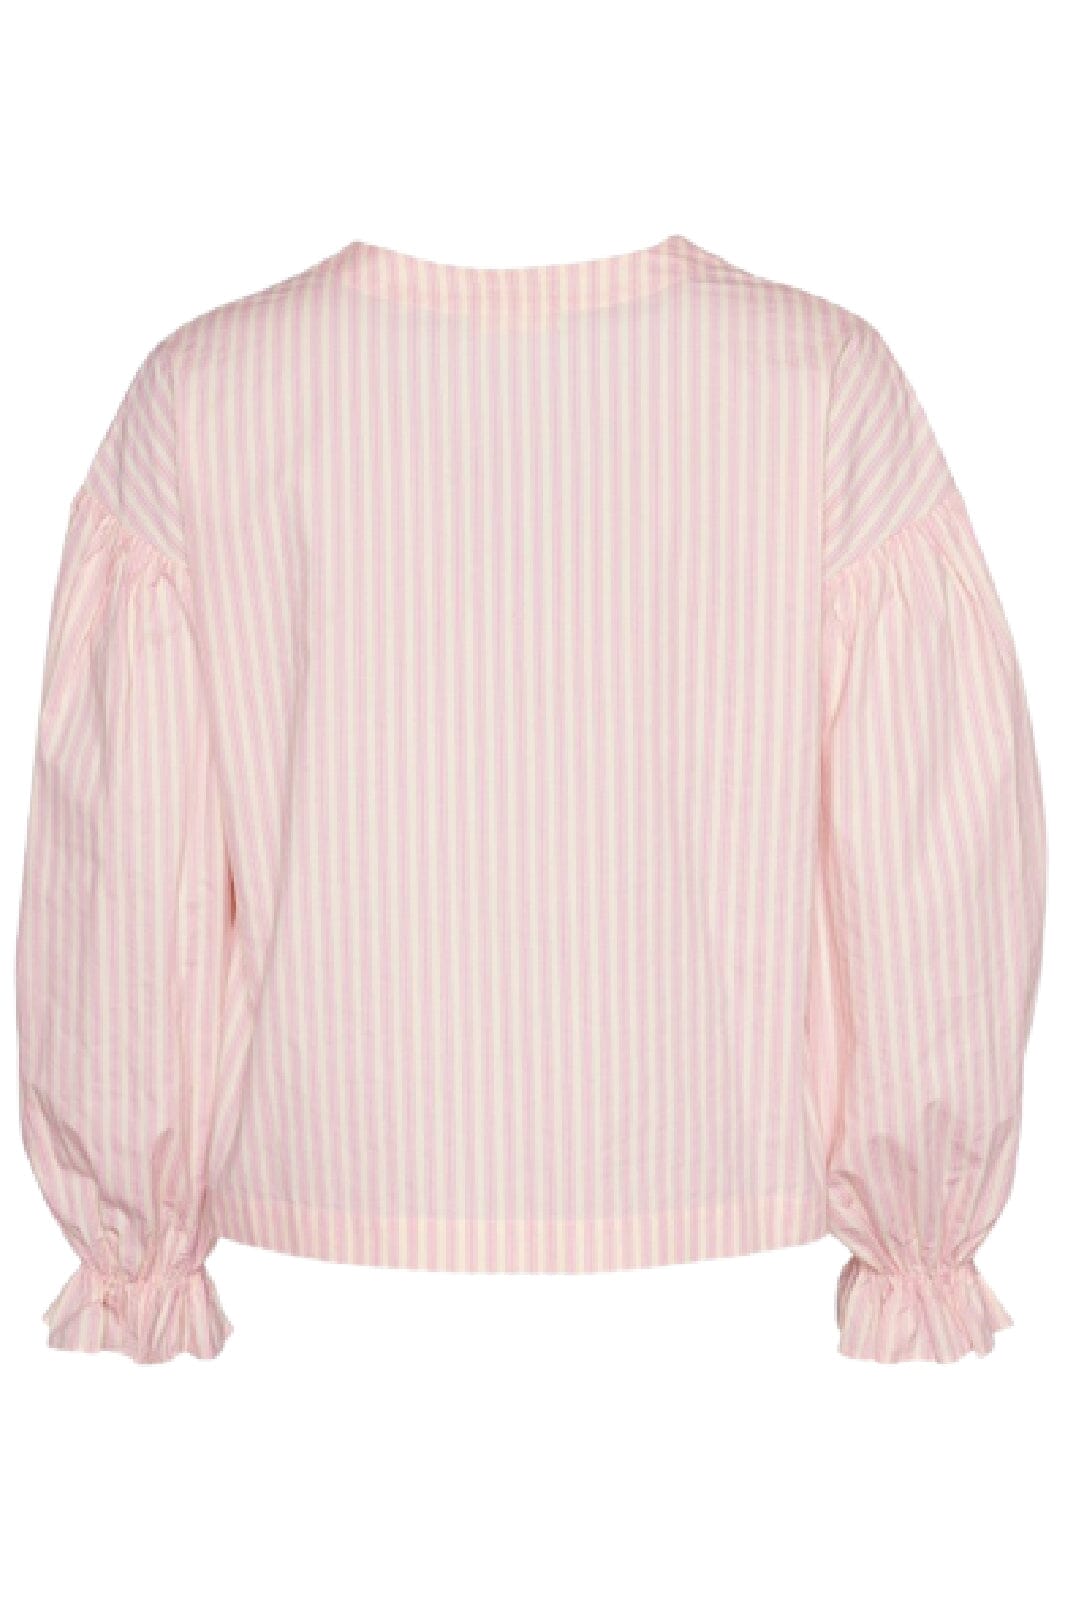 Sissel Edelbo - Ida Organic Cotton Top - Pink Stripe Bluser 